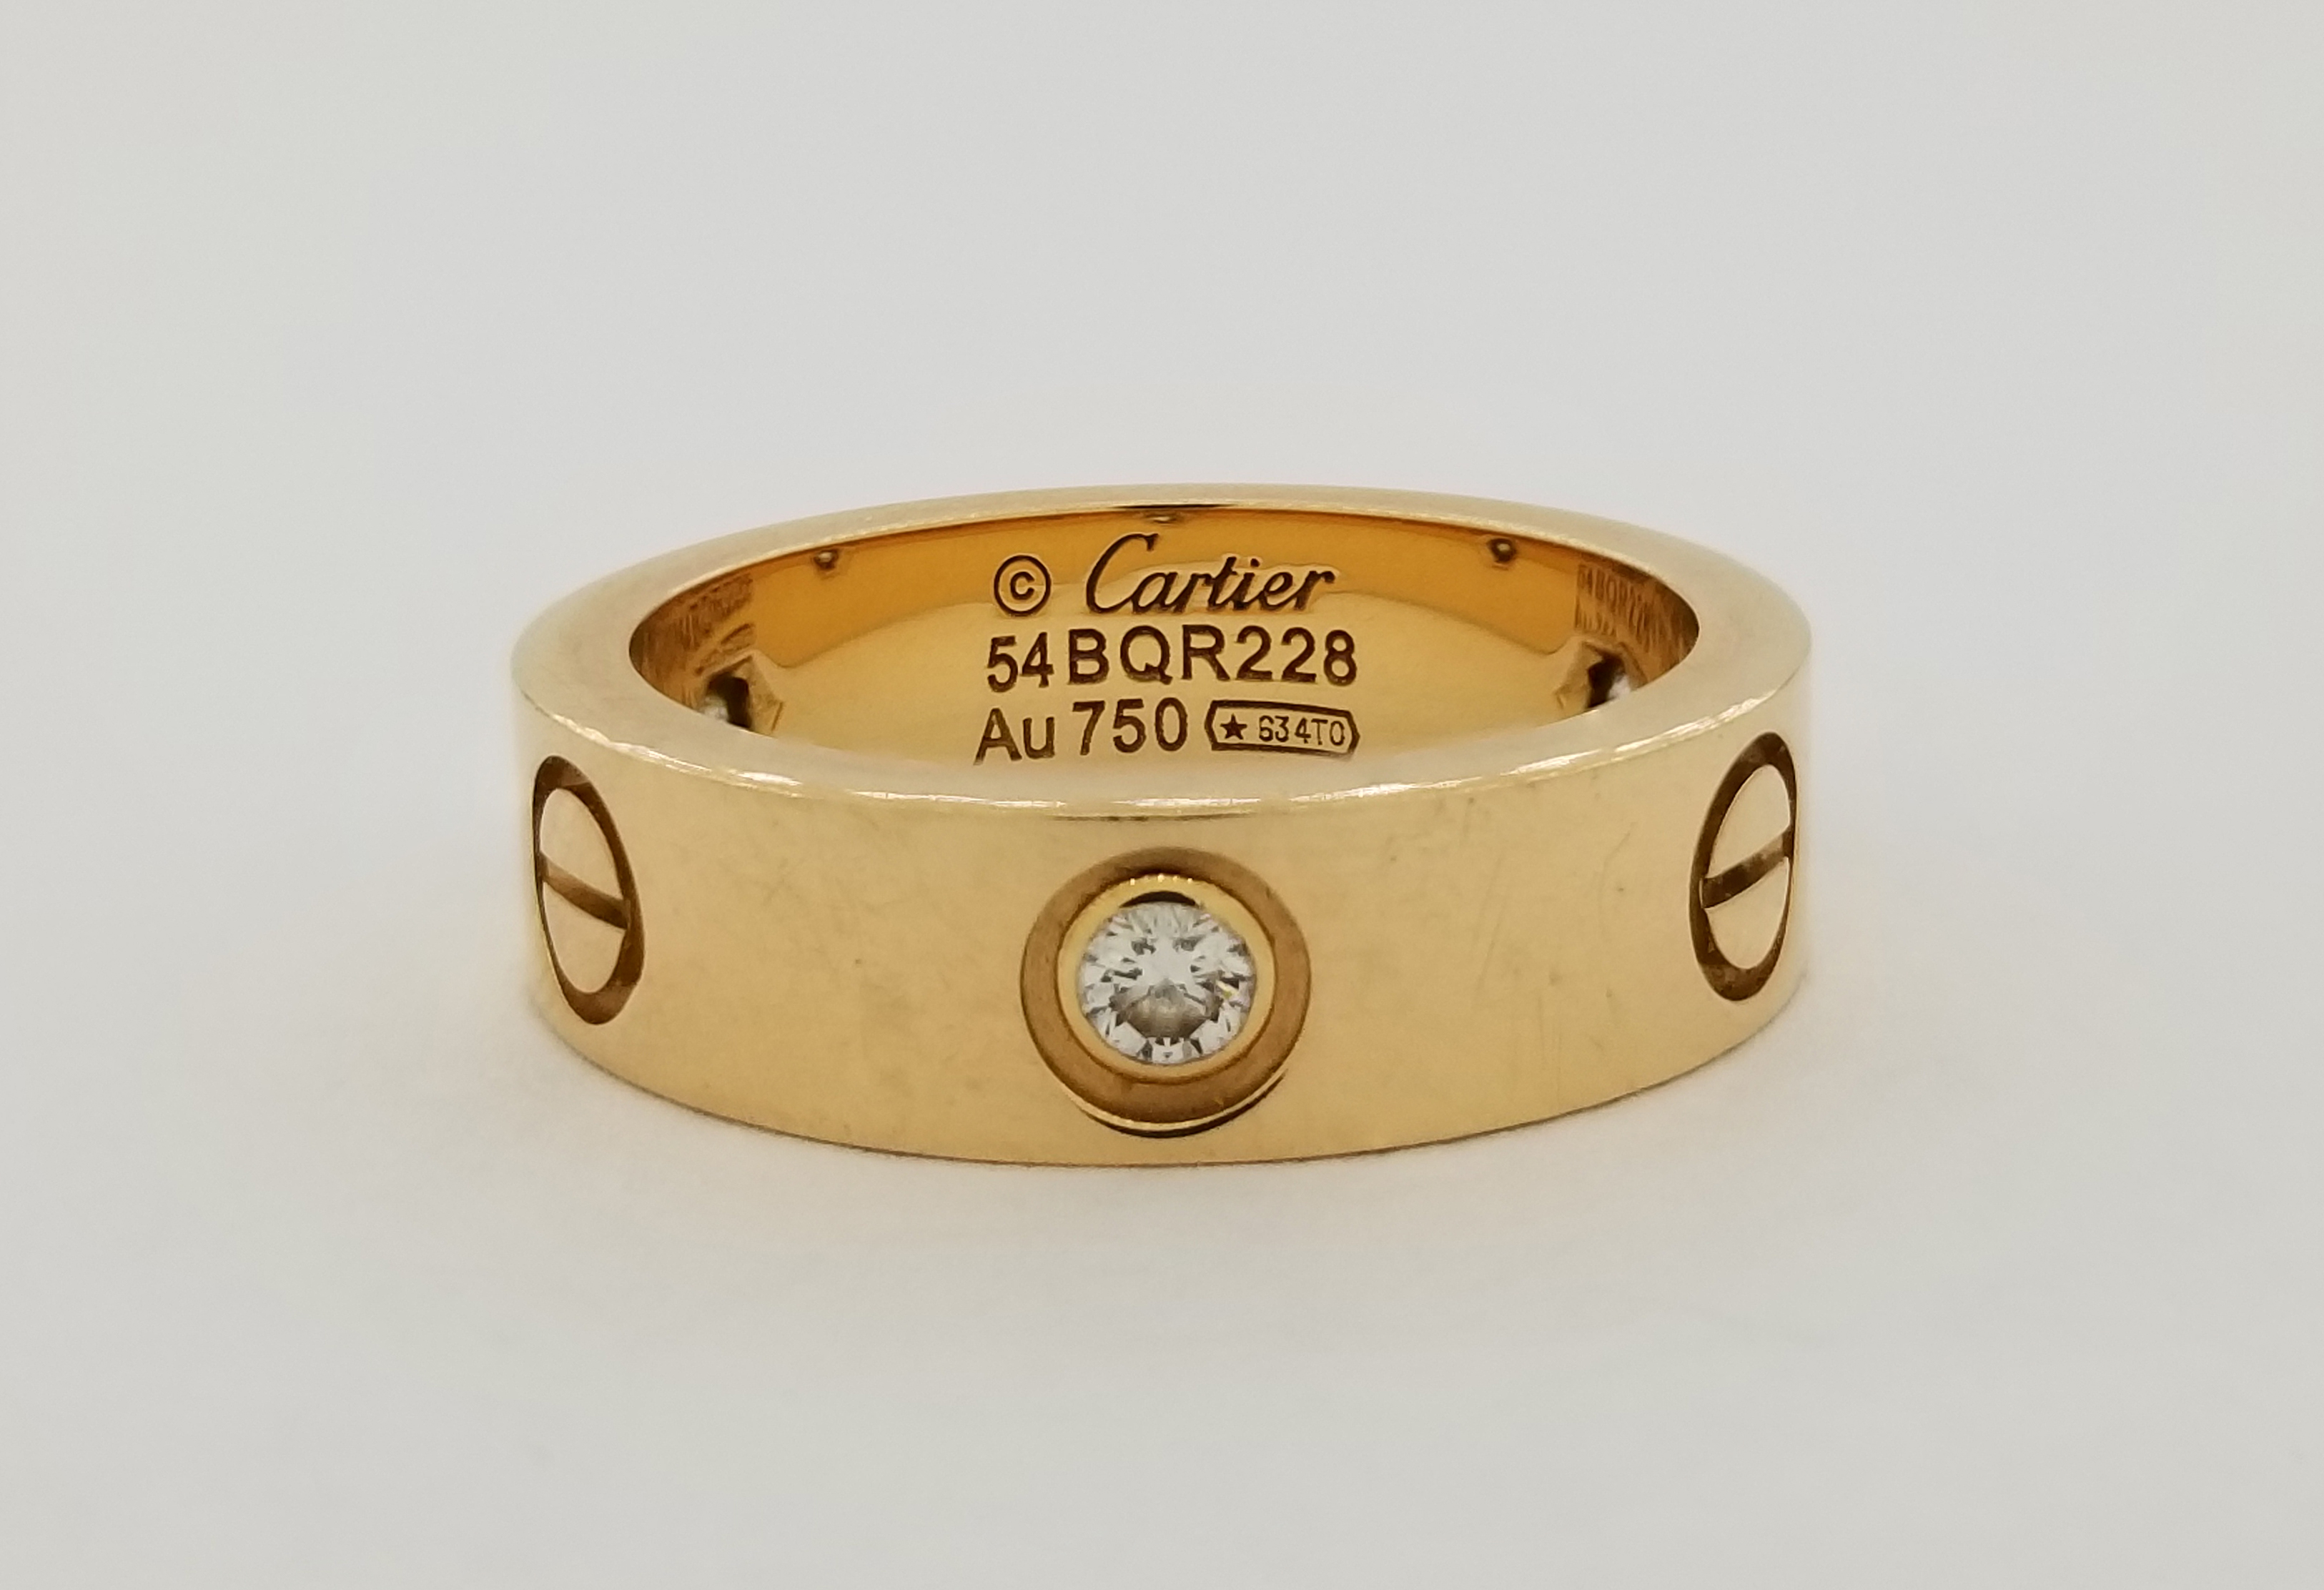 Cartier 18K Gold Diamond LOVE Ring - Image 2 of 5